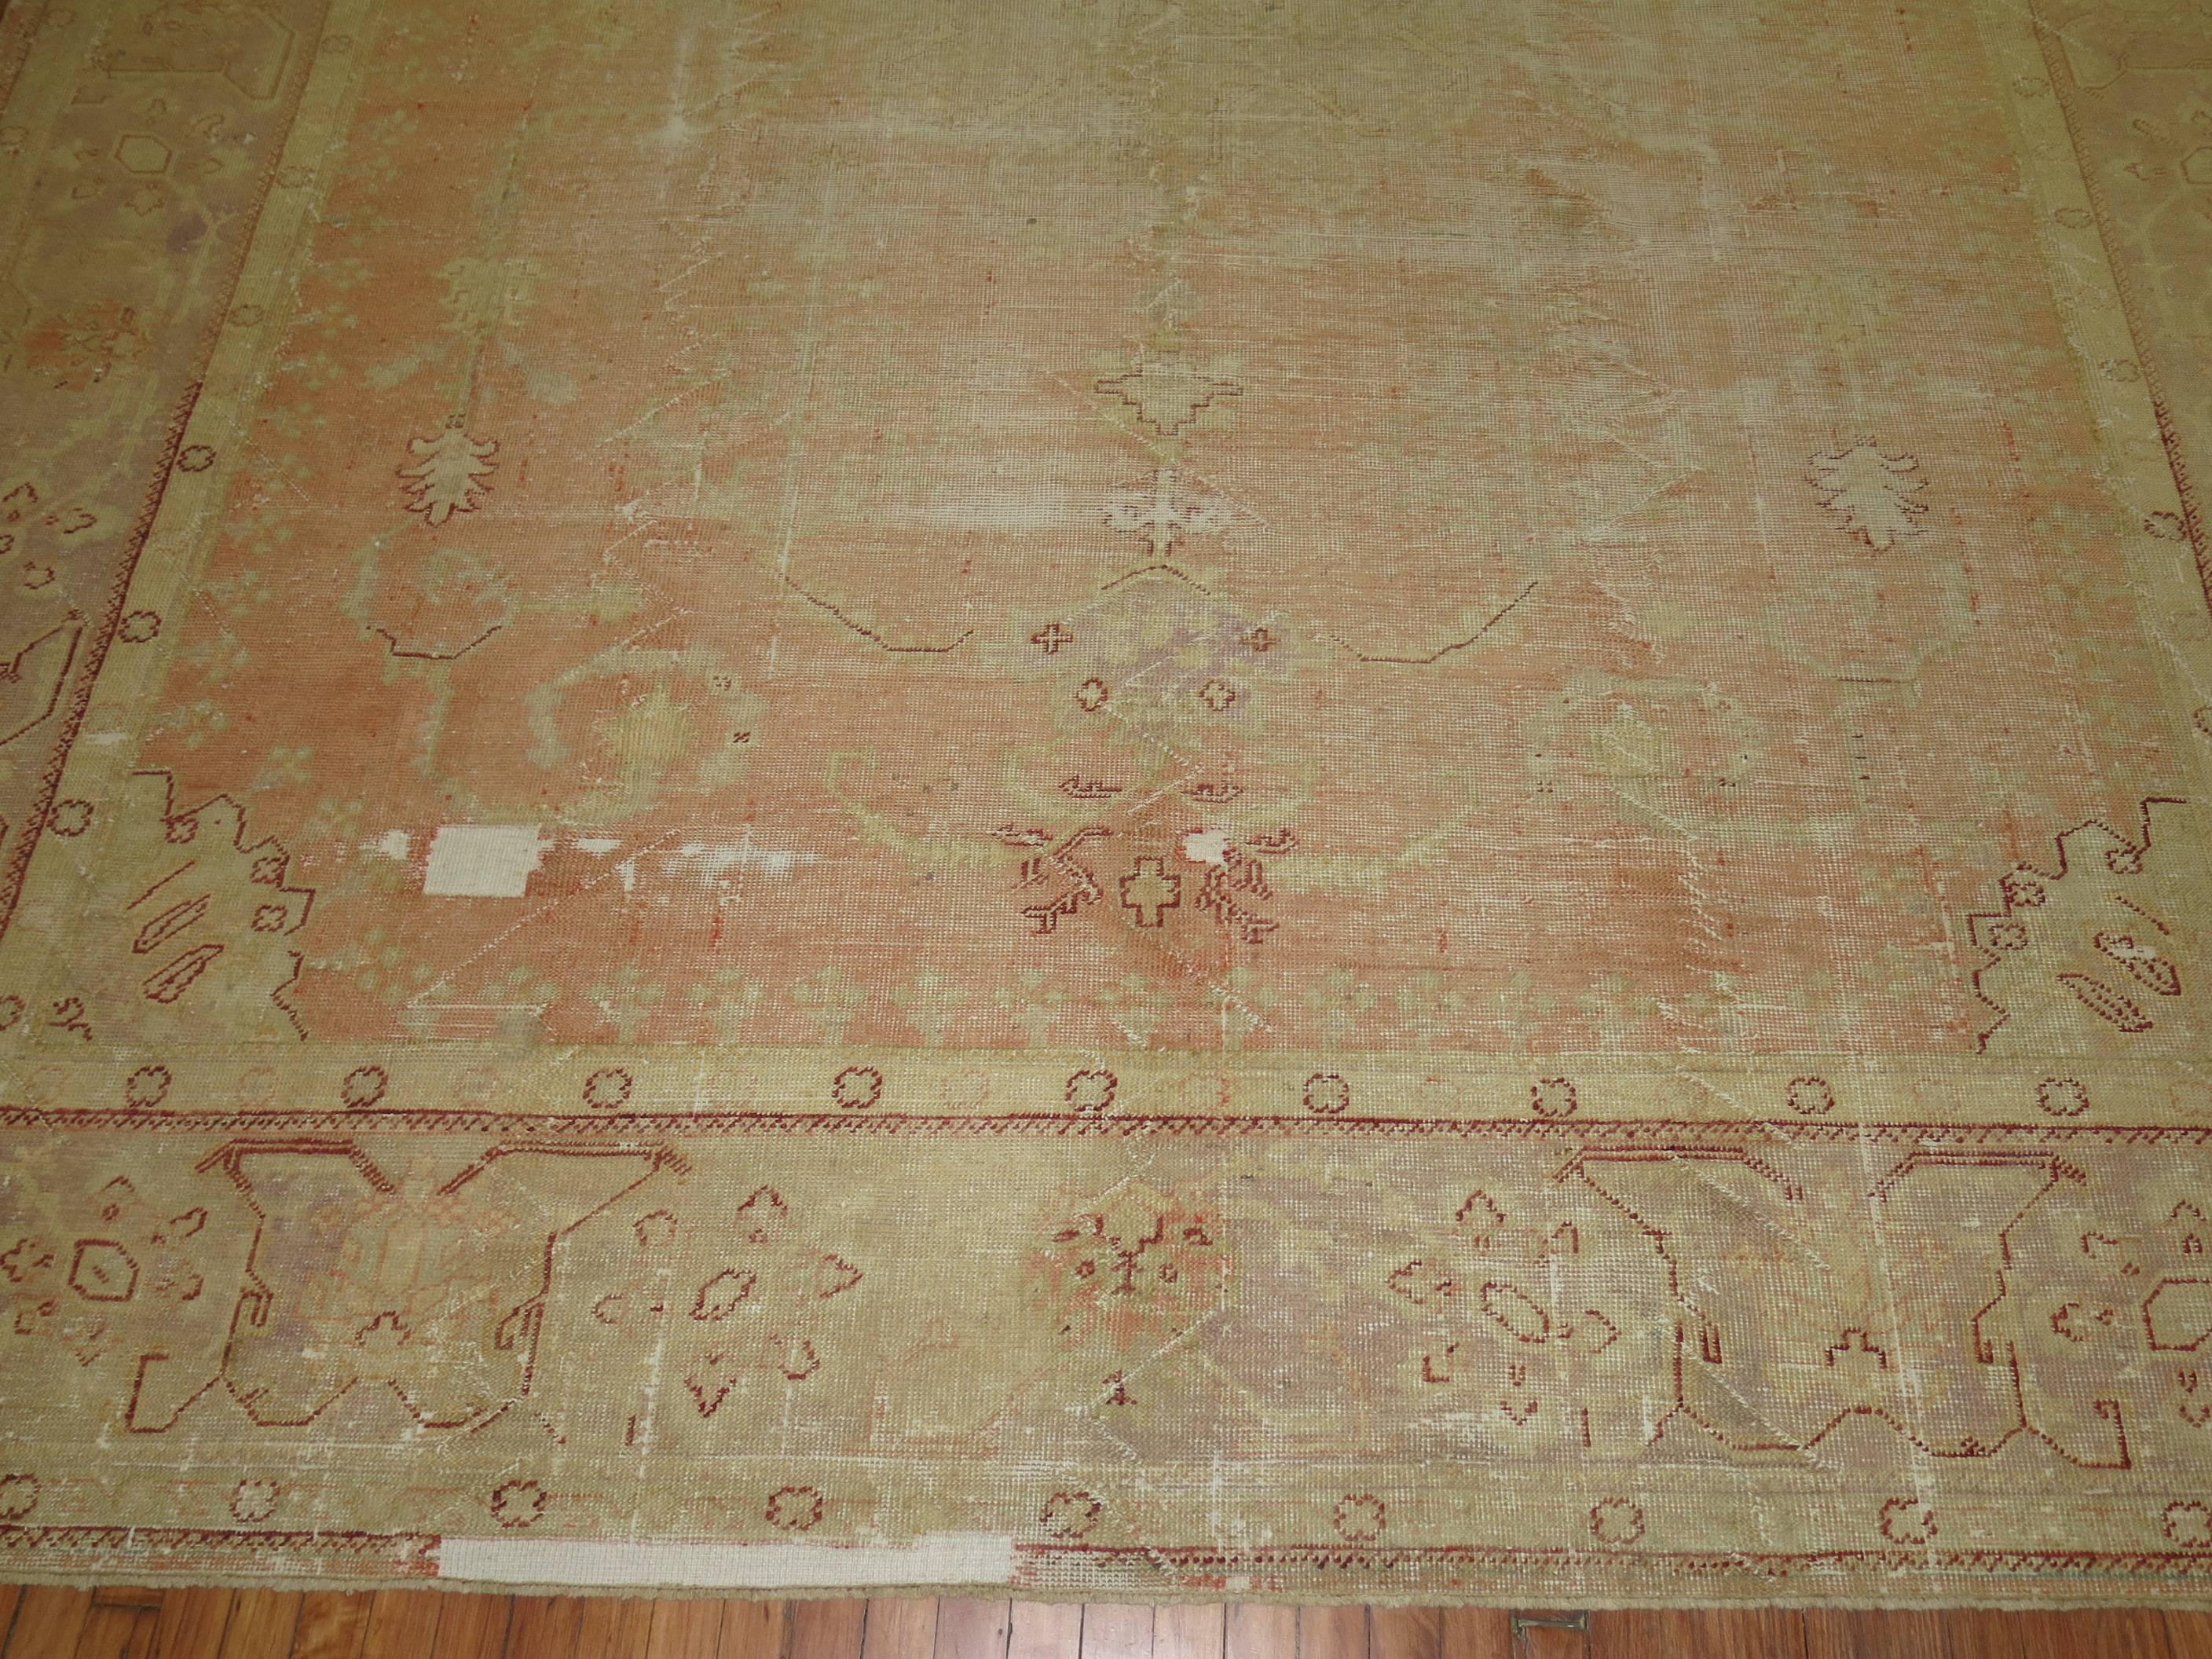 Hand-Woven Shabby Chic Antique Oushak Carpet For Sale